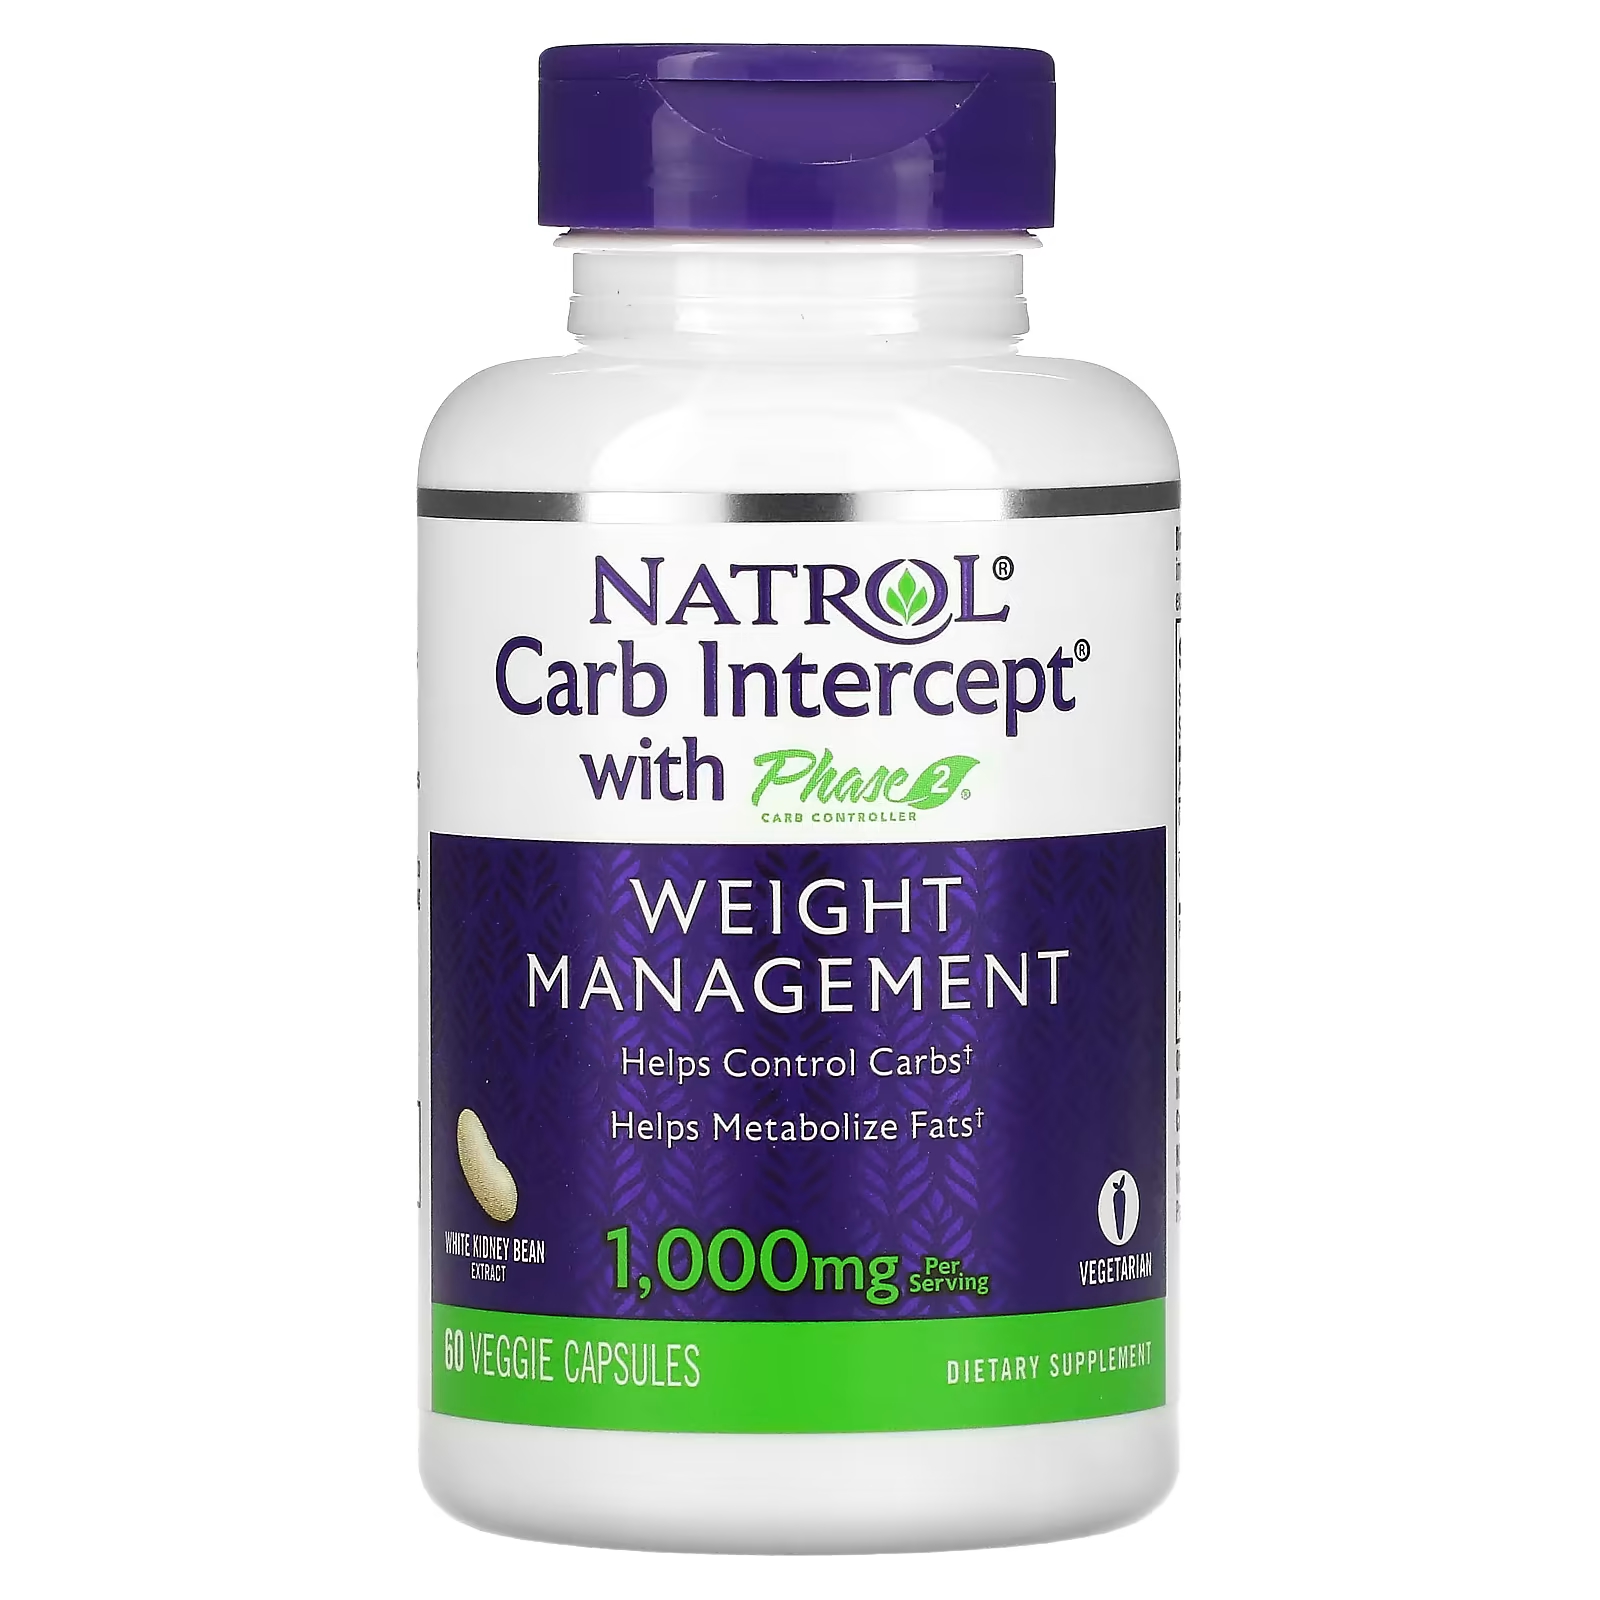 Пищевая добавка Natrol Carb Intercept With Phase 2 Carb Controller 1000 мг, 60 капсул (500 мг на капсулу) цена и фото